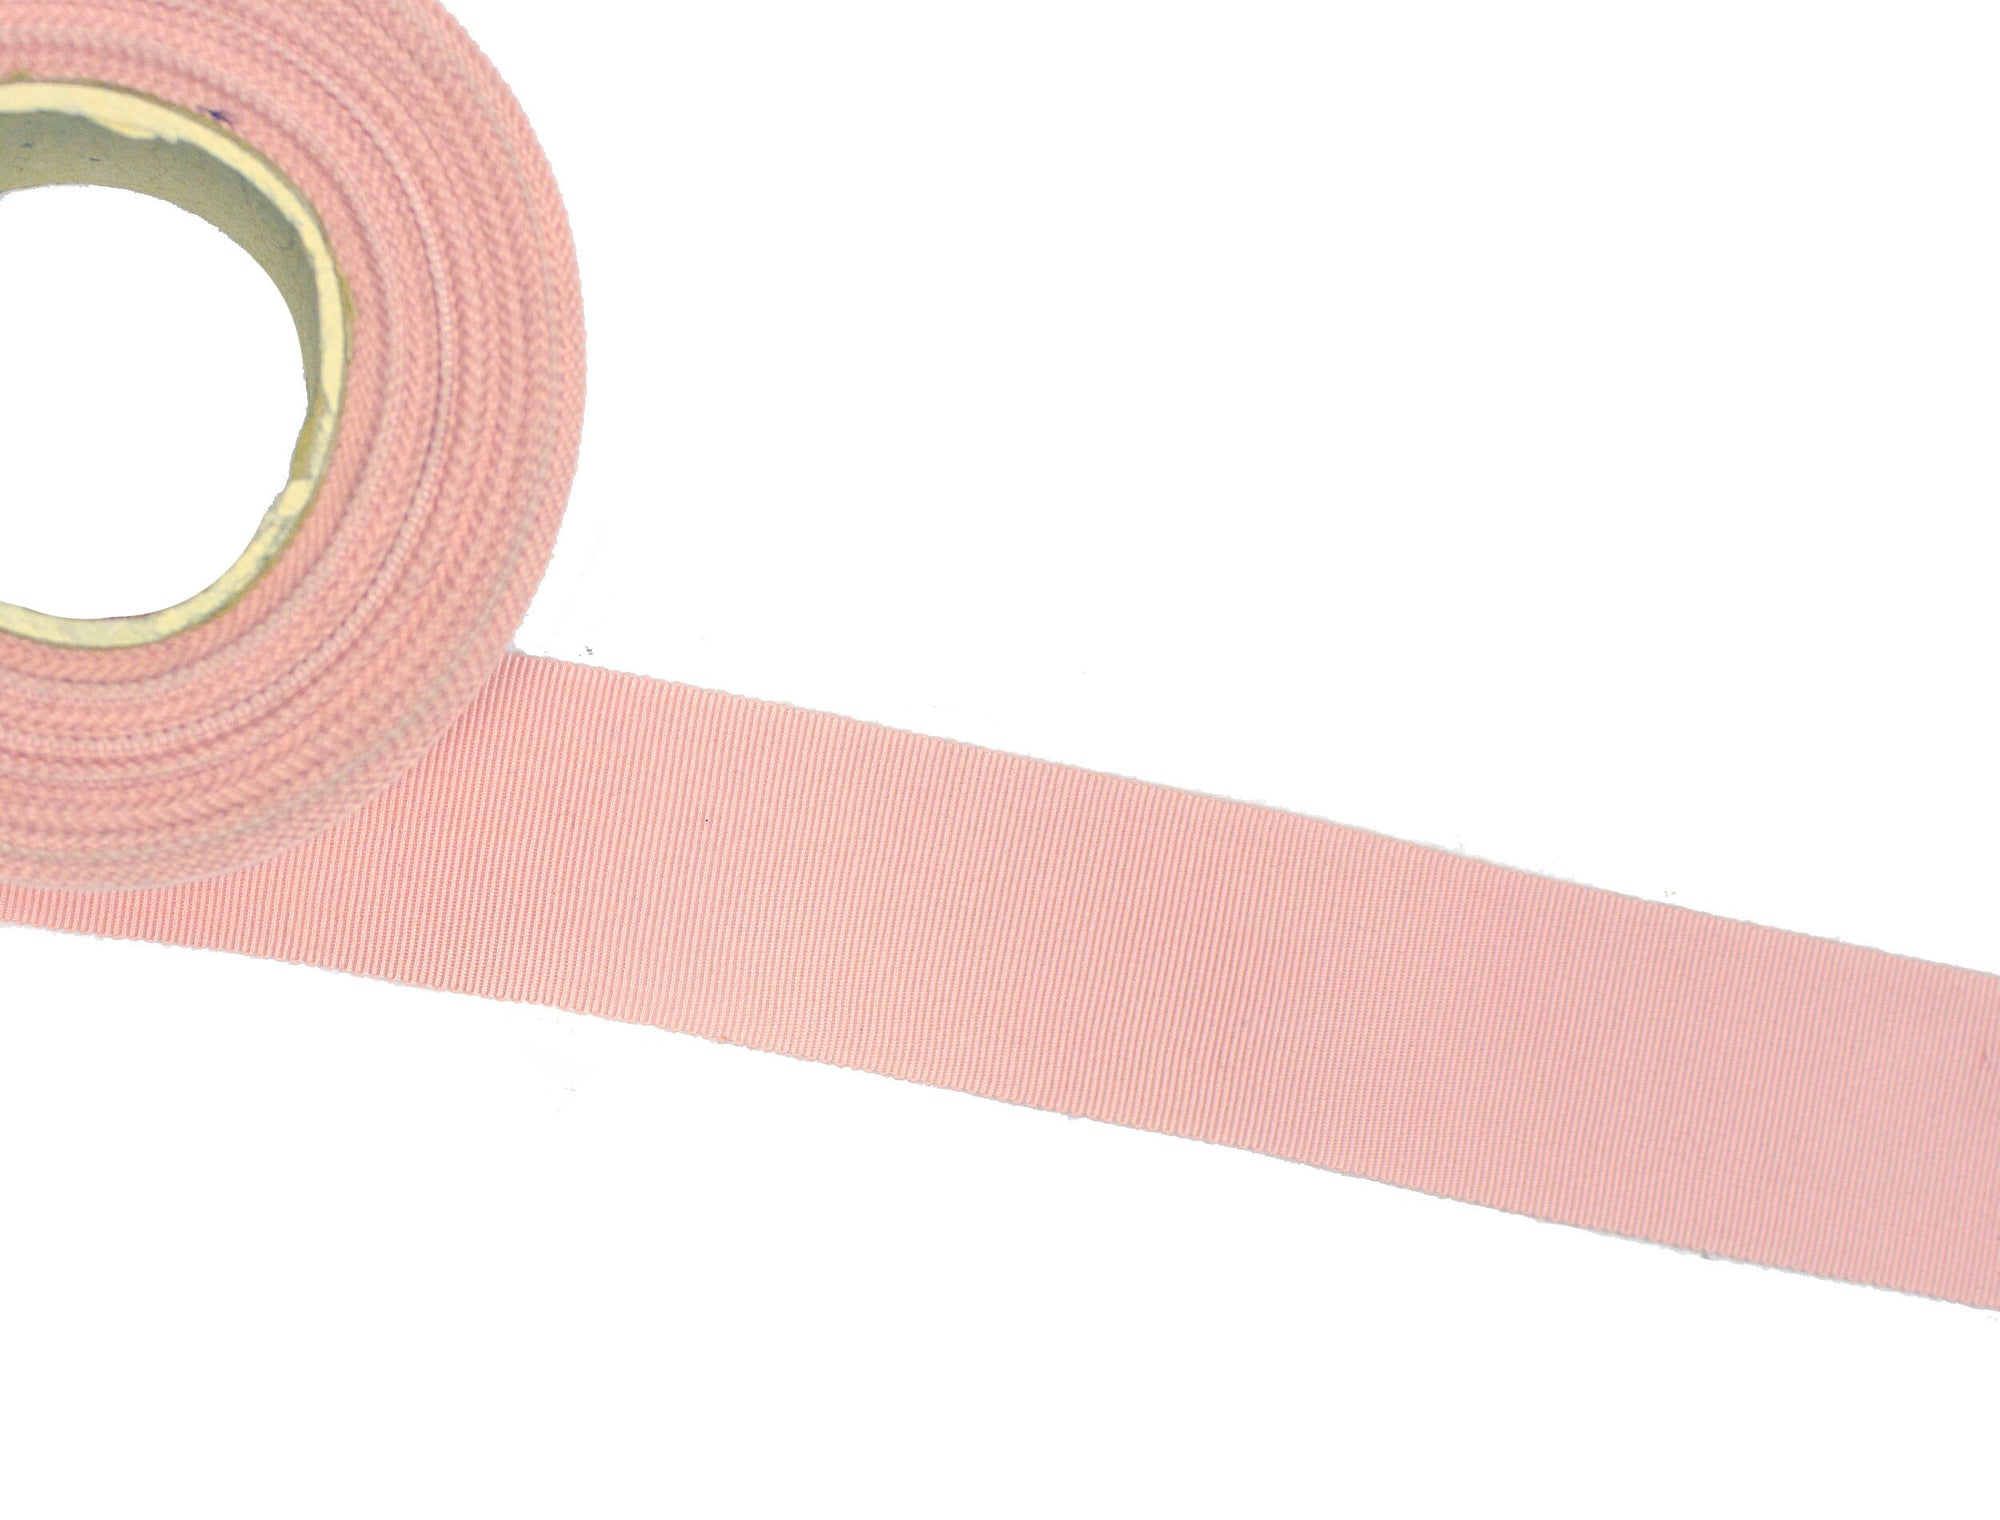 Vintage Petersham Ribbon Light Pink - Measures 35 mm Wide - Sold by the Yard